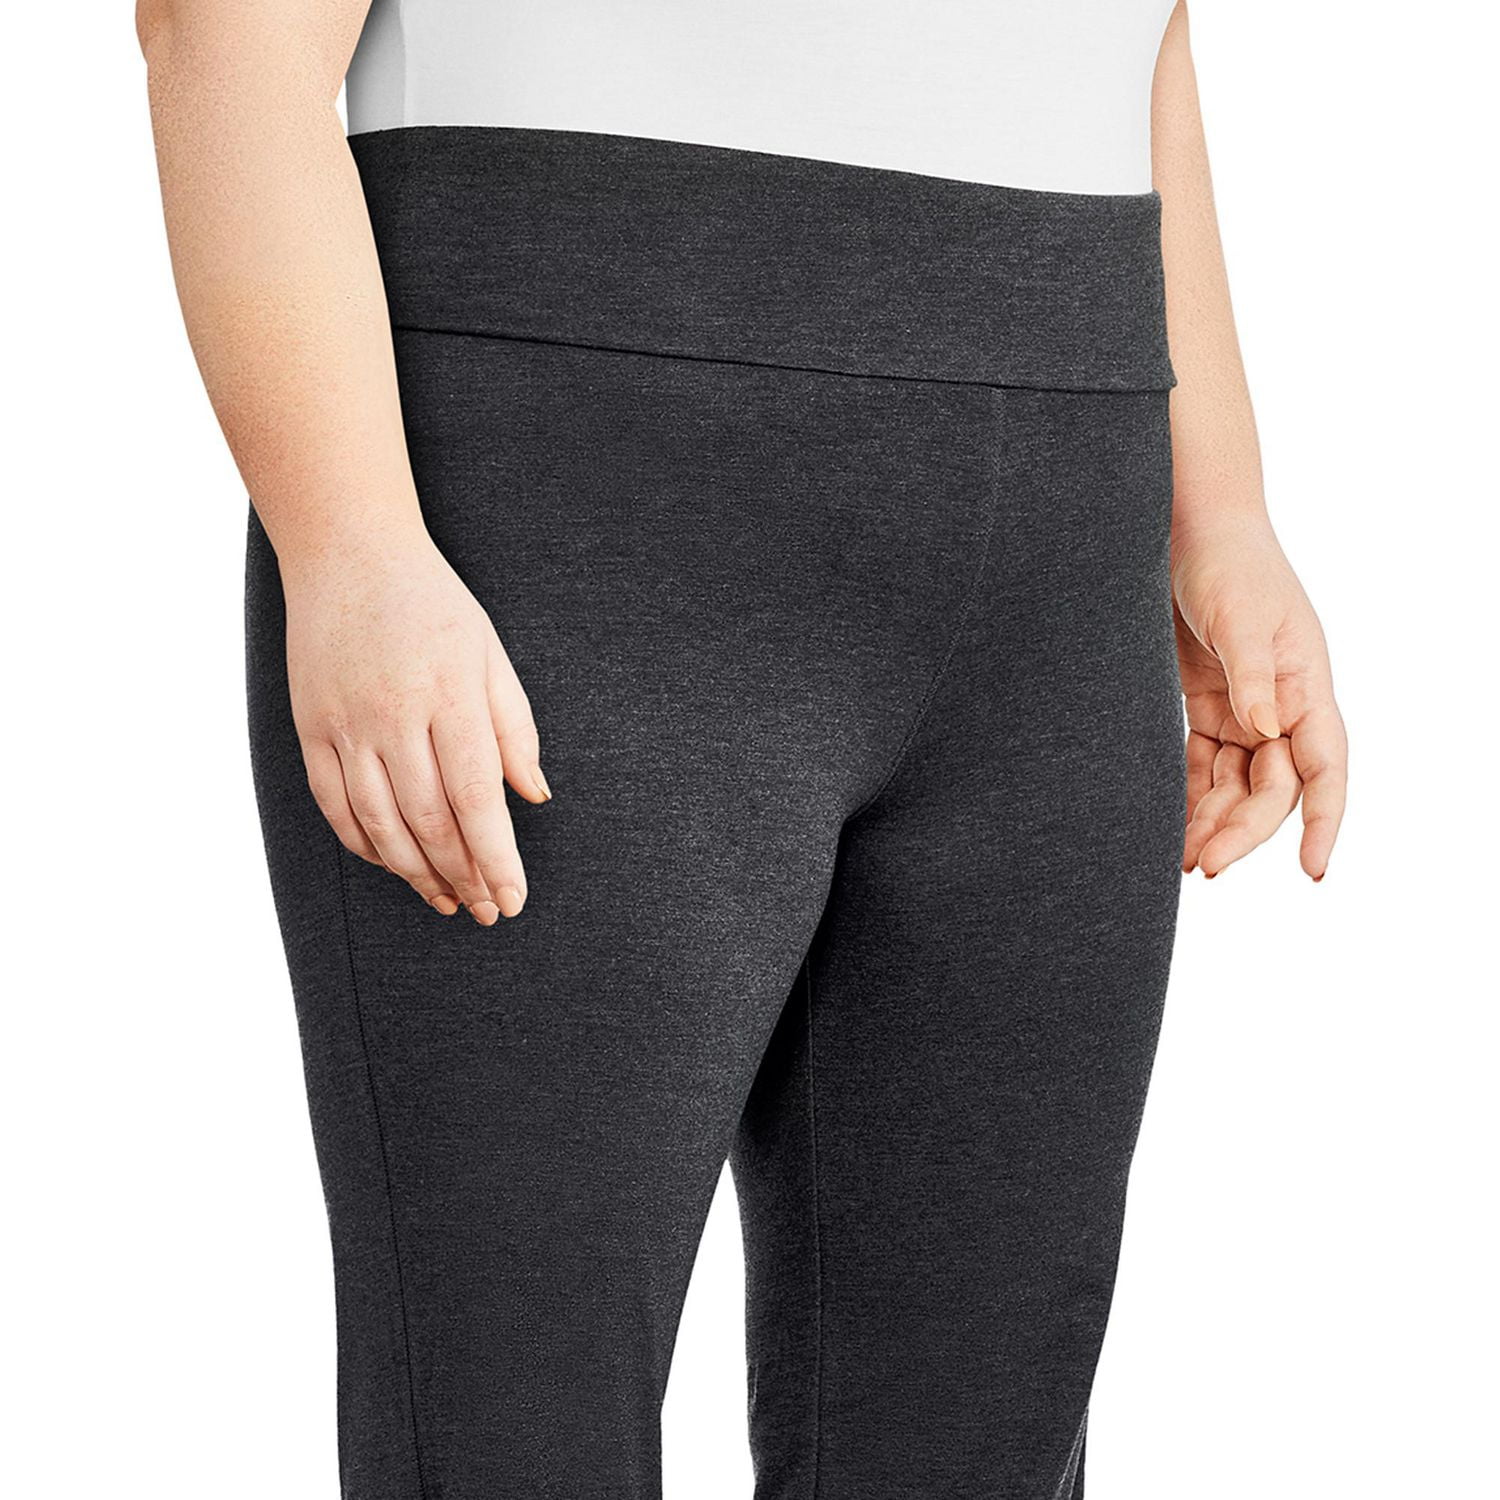 George Plus Women's Yoga Pant, Sizes 1X-4X 